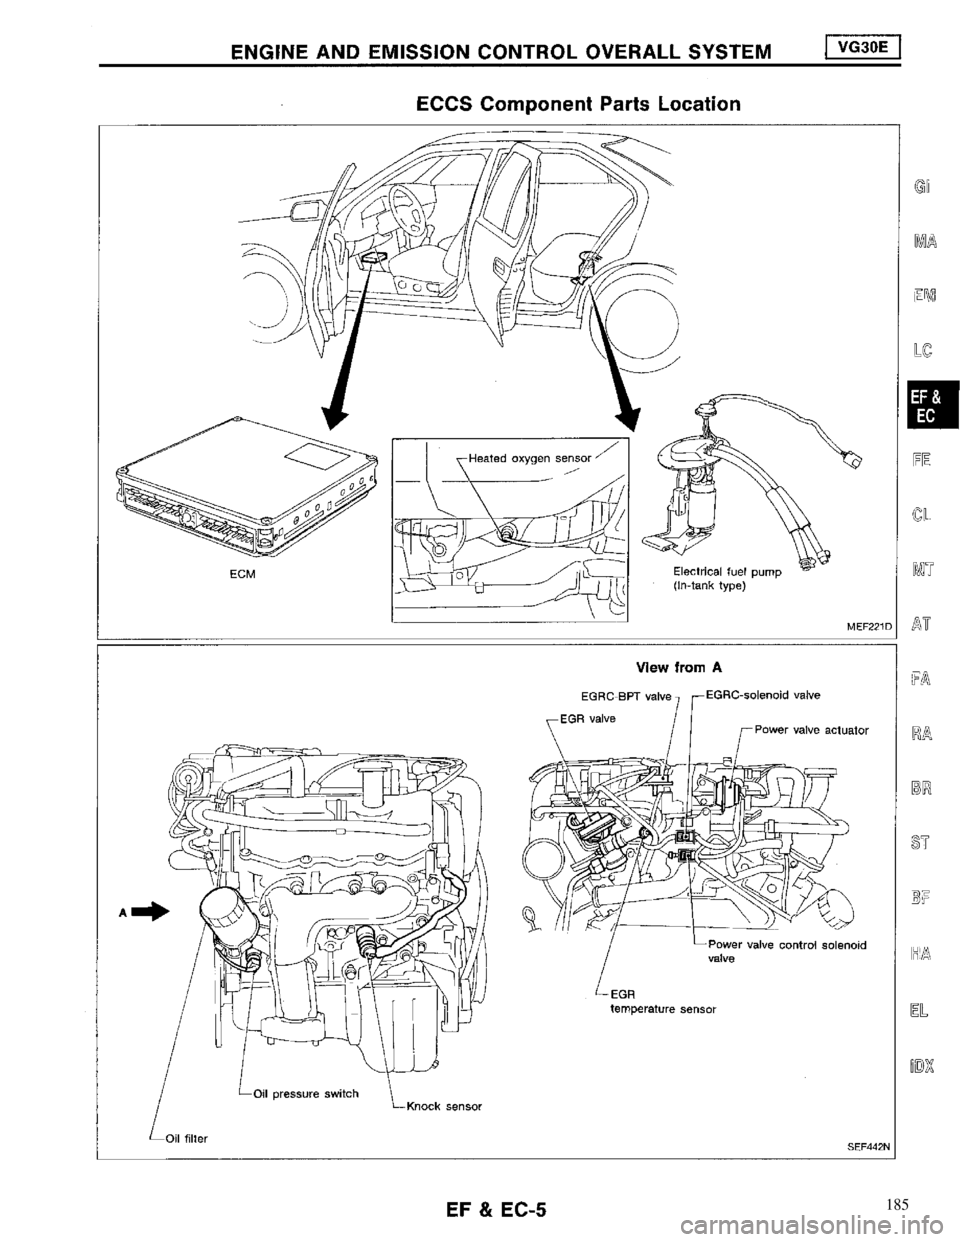 NISSAN MAXIMA 1994 A32 / 4.G Engine Fuel And Emission Control System Workshop Manual 185 